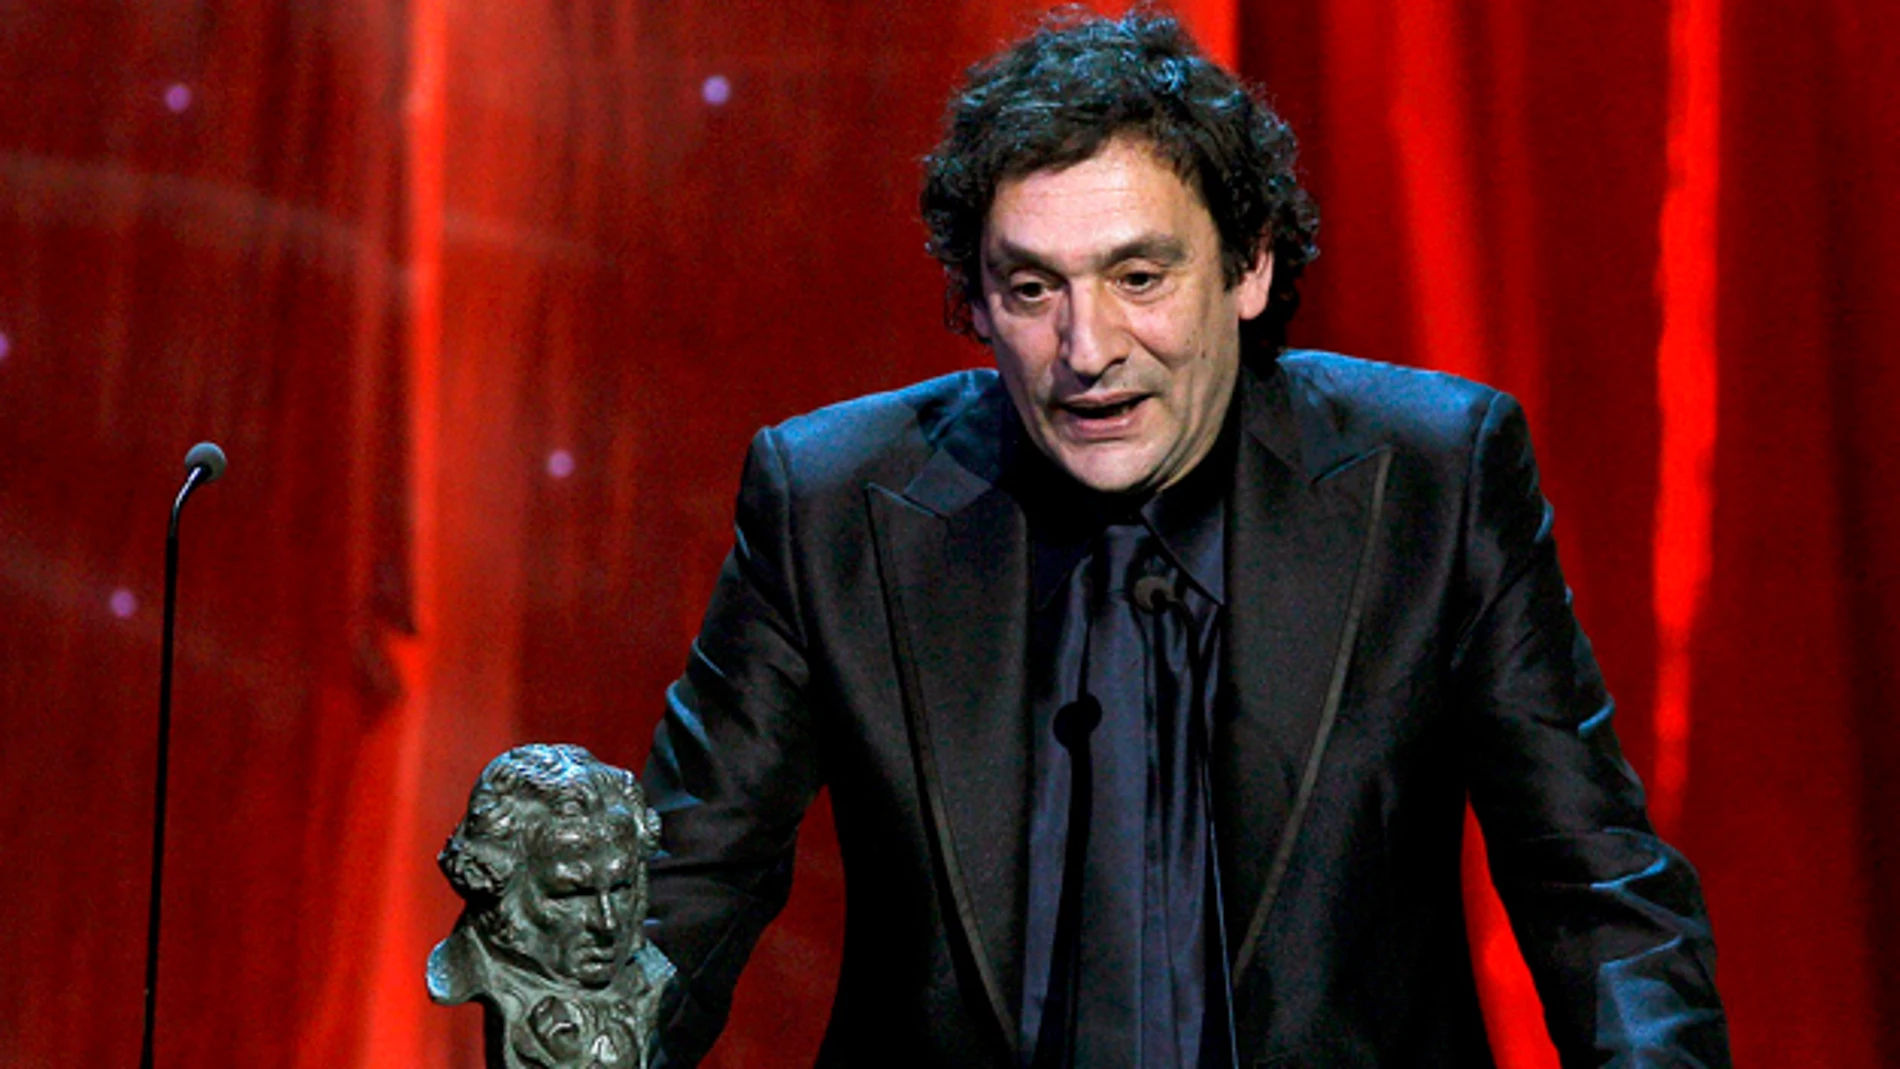 Agustí Villaronga ganó el Goya al mejor director